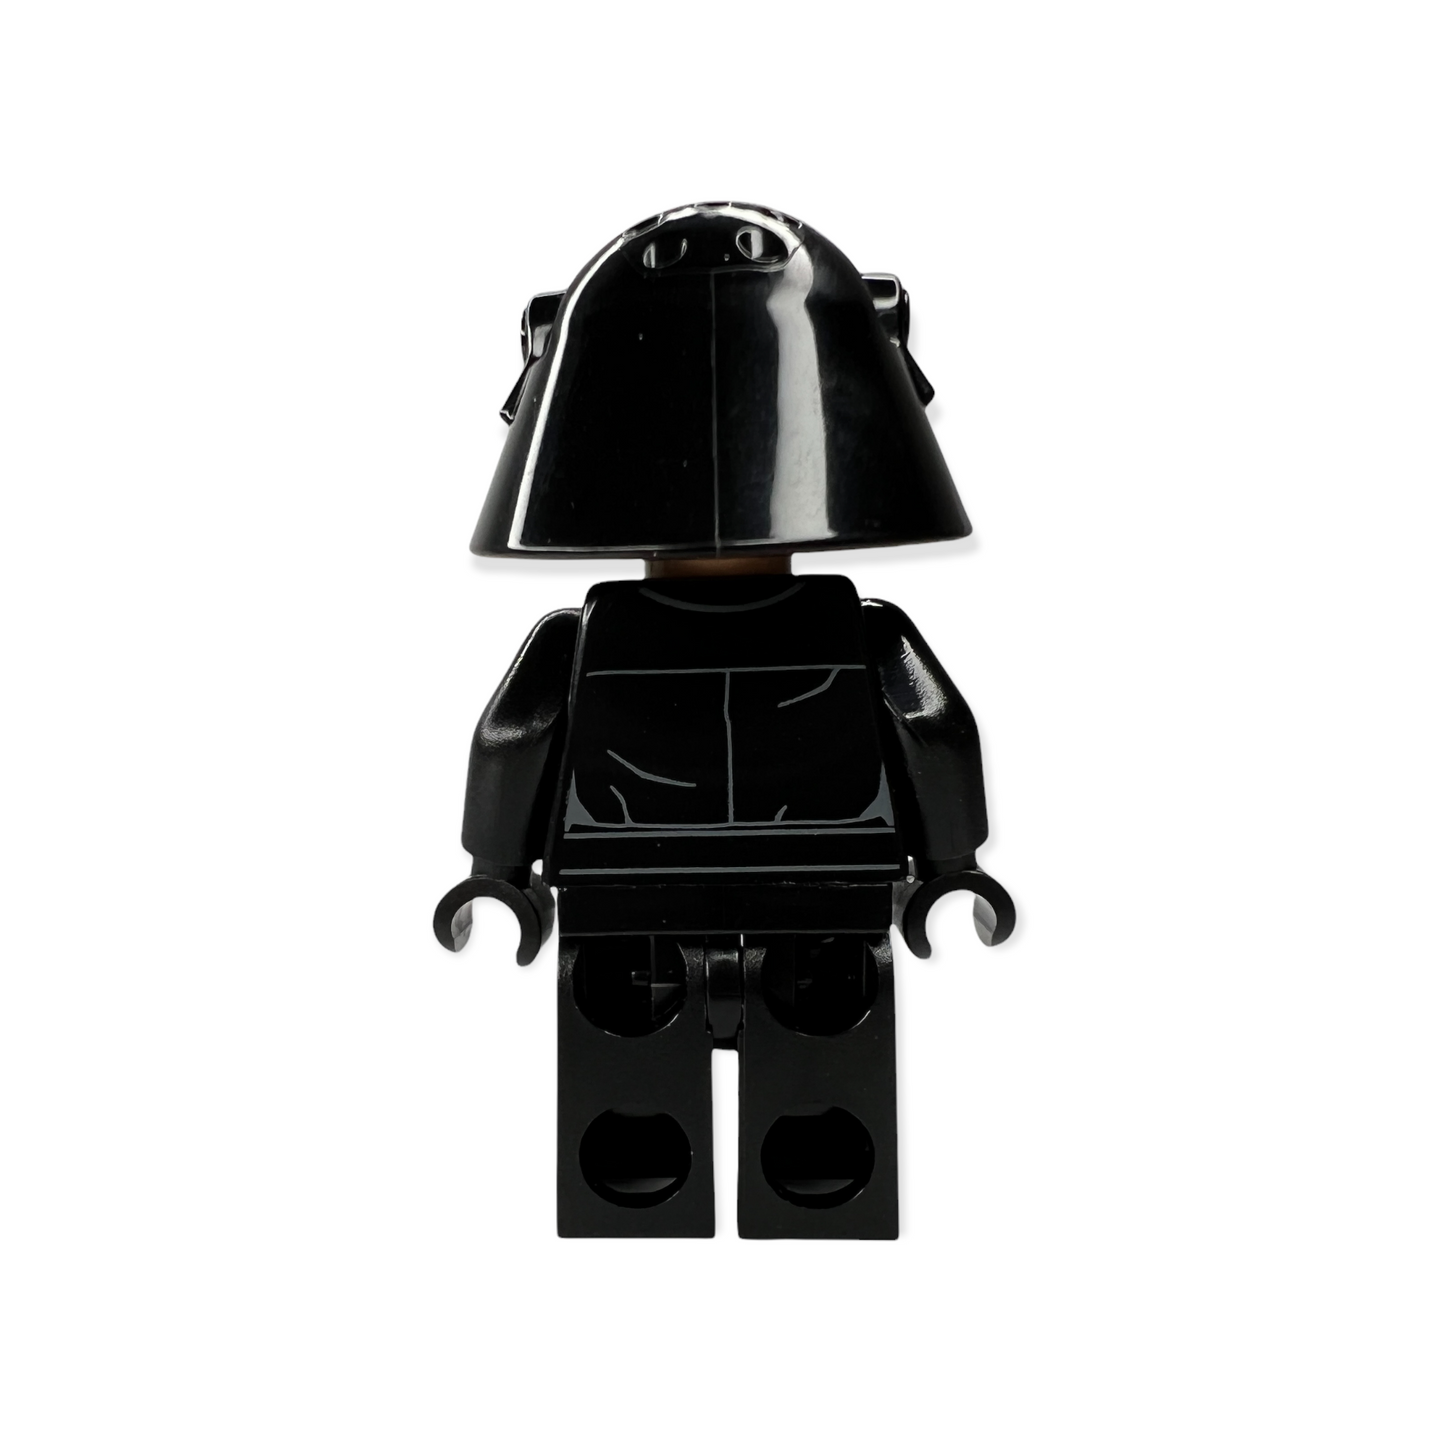 LEGO Minifigur sw0583 - Imperial Navy Trooper